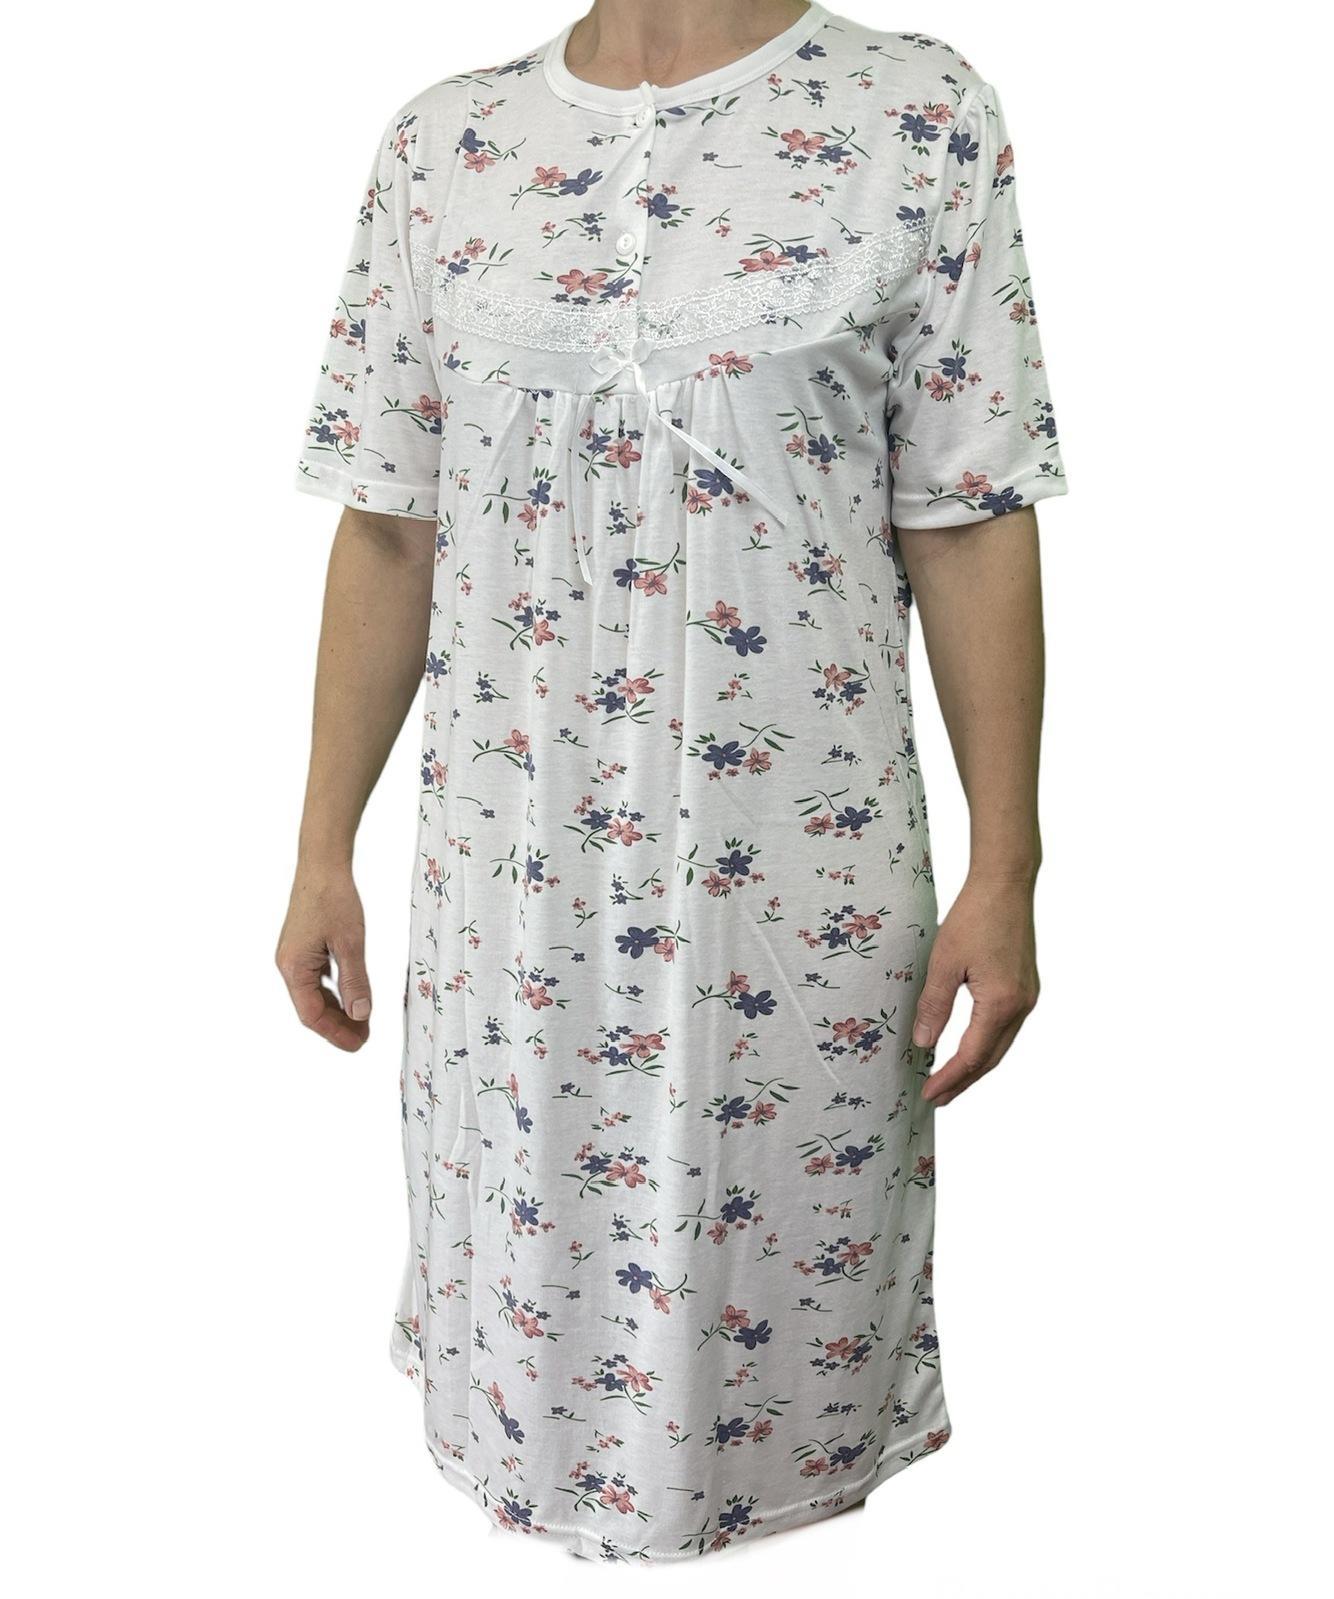 Womens Ladies Cotton Nightie Night Gown Slip Petticoat PJs Sleepwear Dress - White/Pink - 14